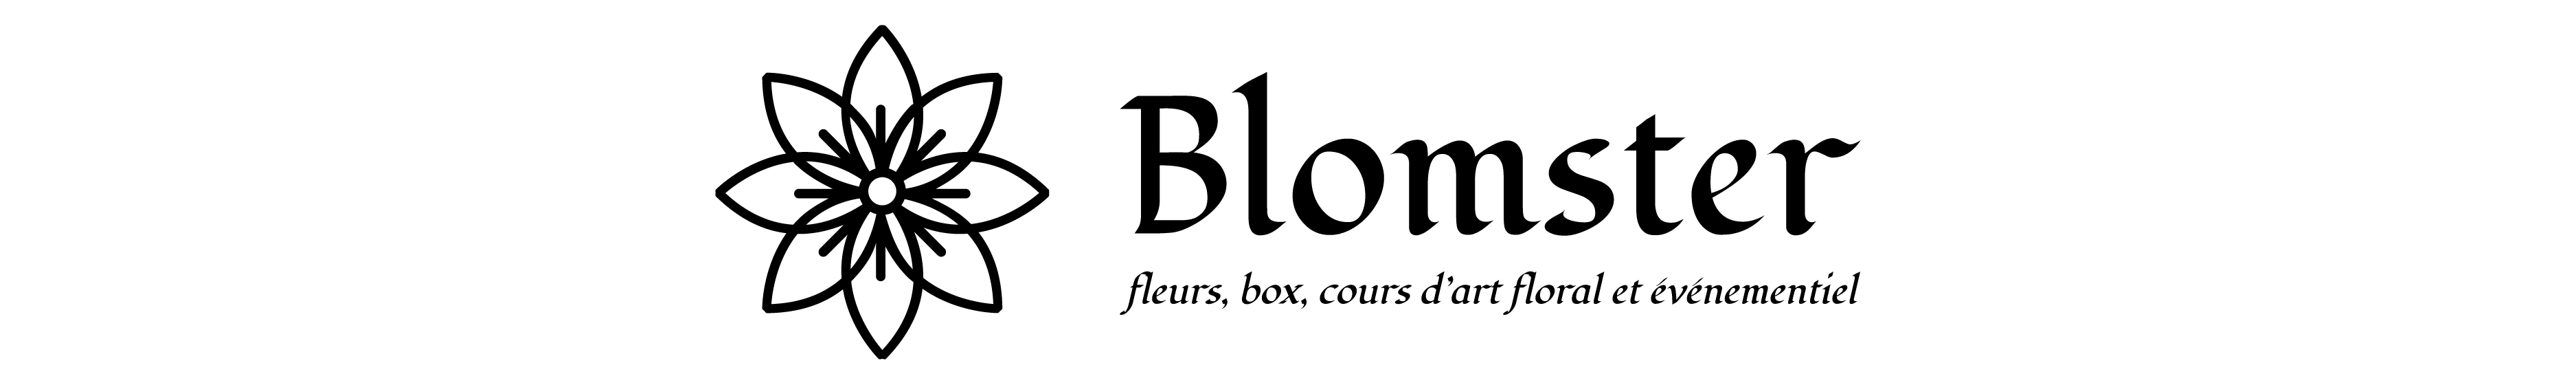 creation logotype fleuriste quimper